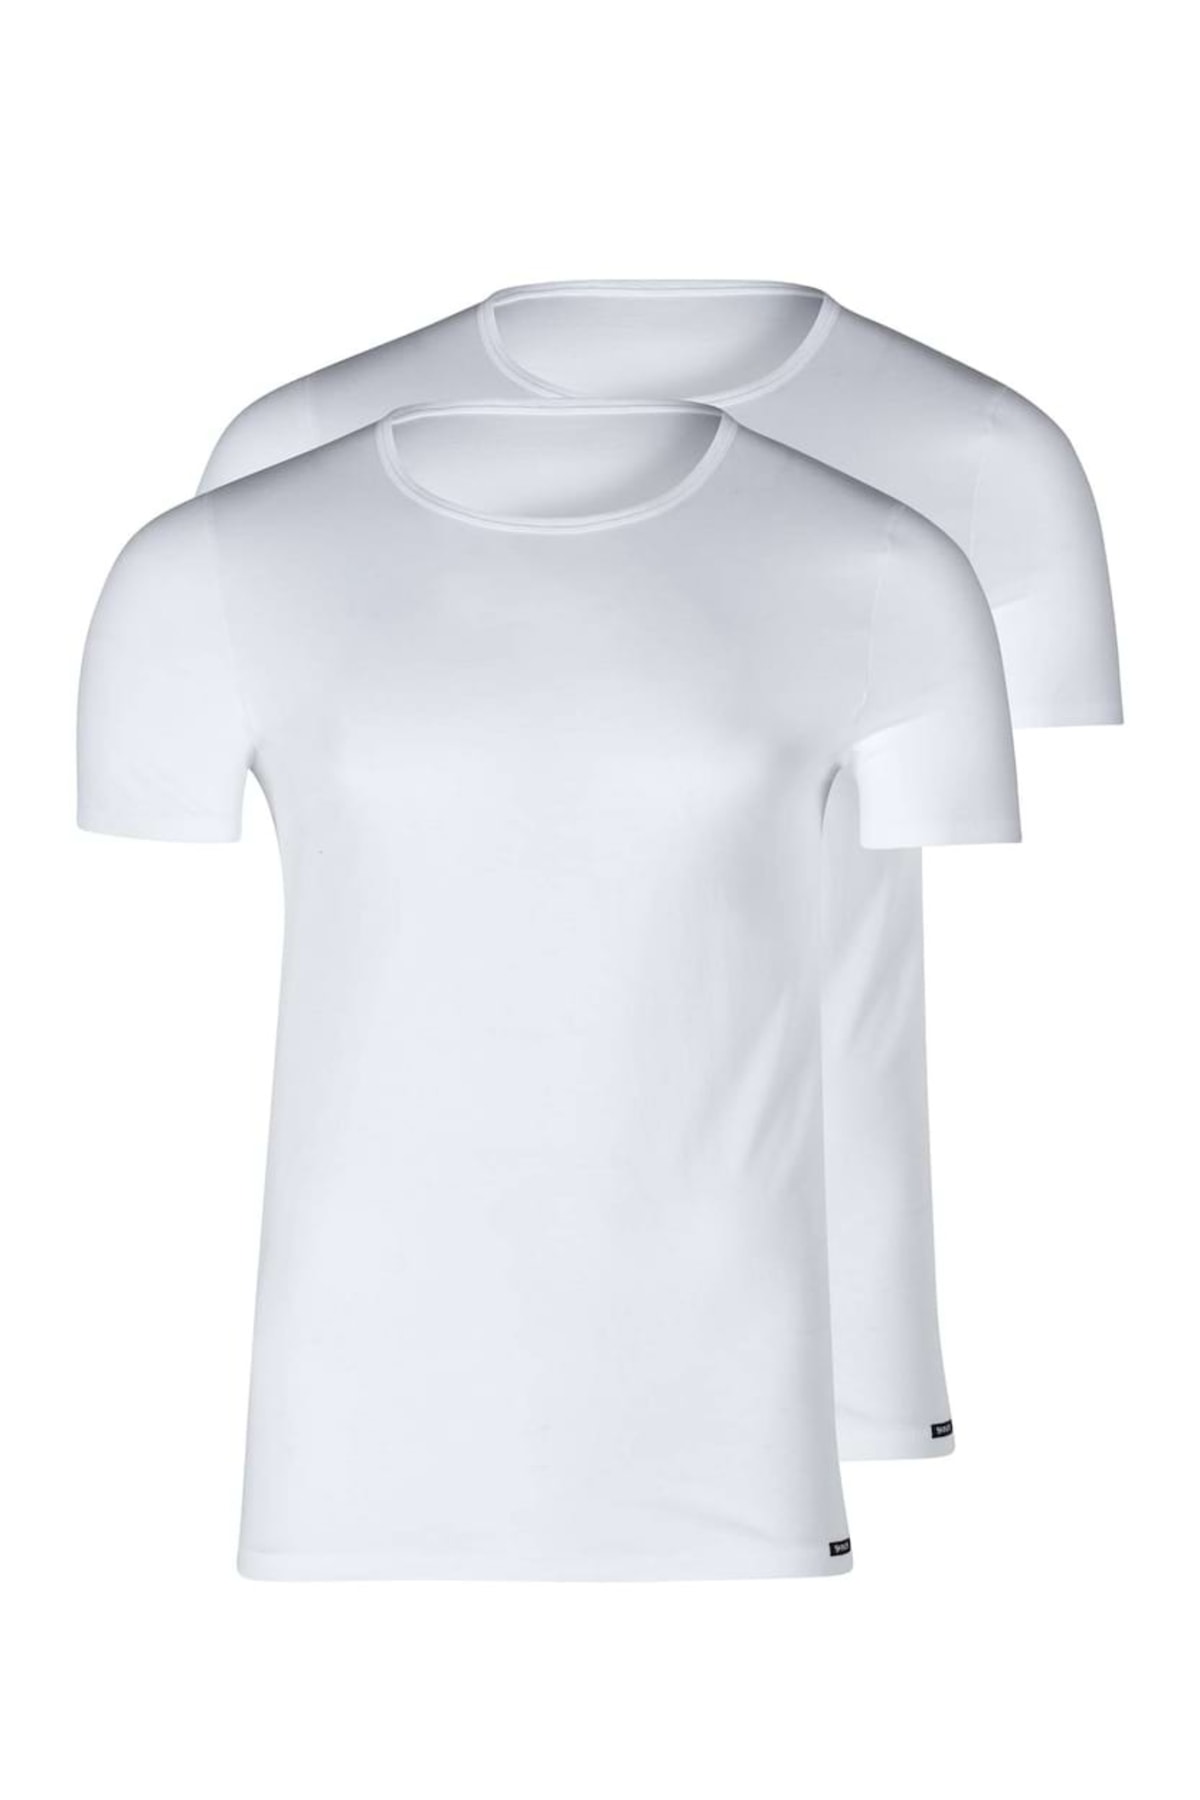 Skiny T-Shirt Weiß Regular Fit Fast ausverkauft